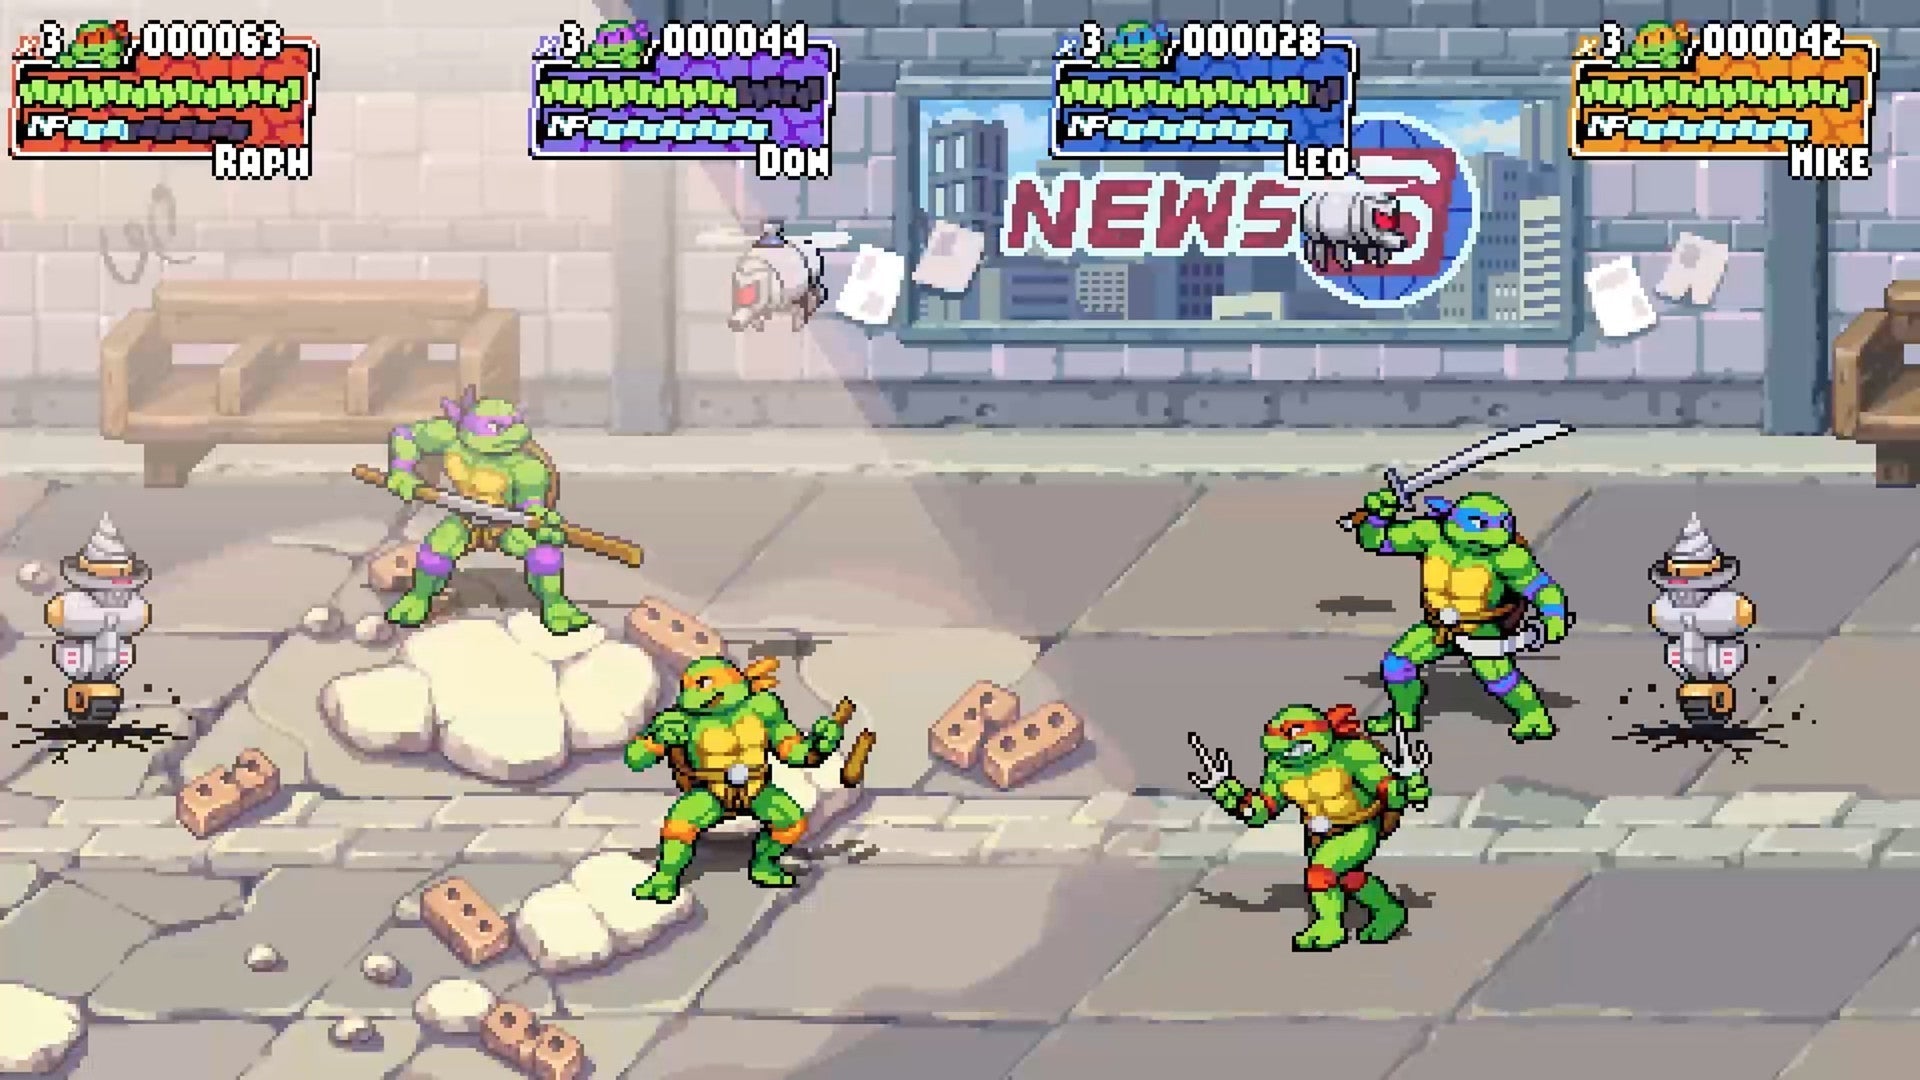 Teenage Mutant Ninja Turtles: Shredder's Revenge - Special Edition (PS –  Signature Edition Games